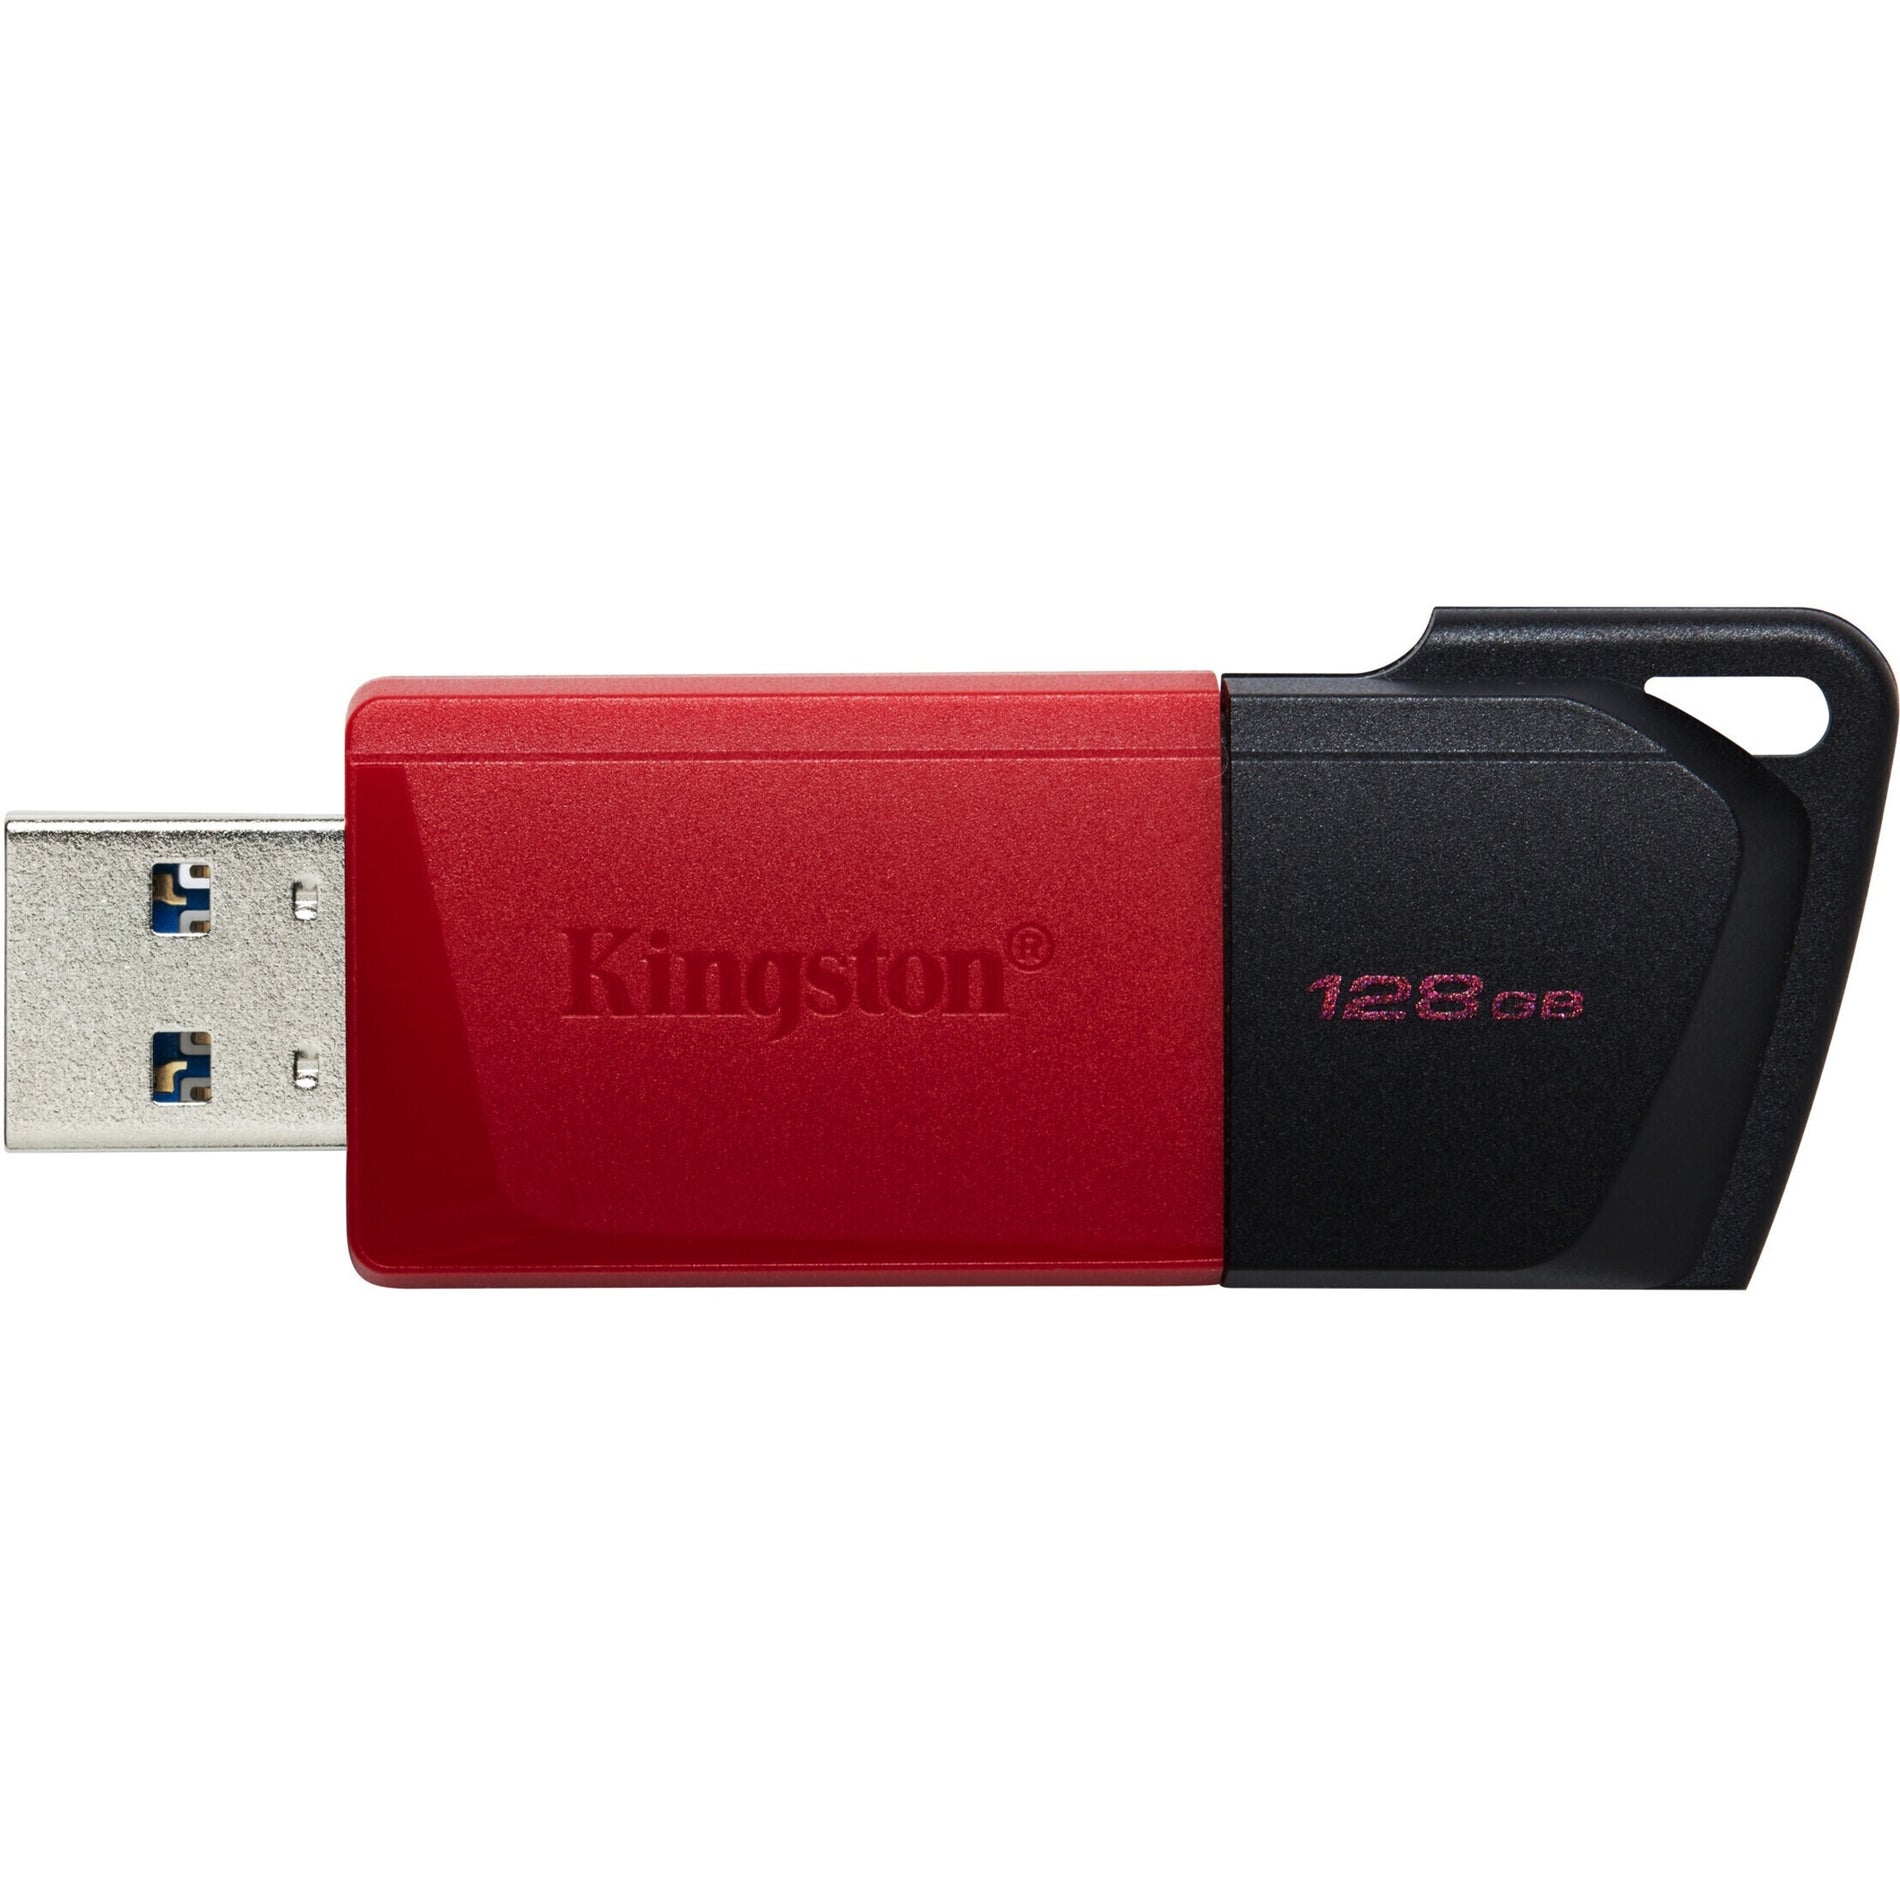 Kingston DTXM/128GB DataTraveler Exodia M USB Flash Drive, 128GB Storage, Lightweight, Sliding Cap, Key Ring, Portable